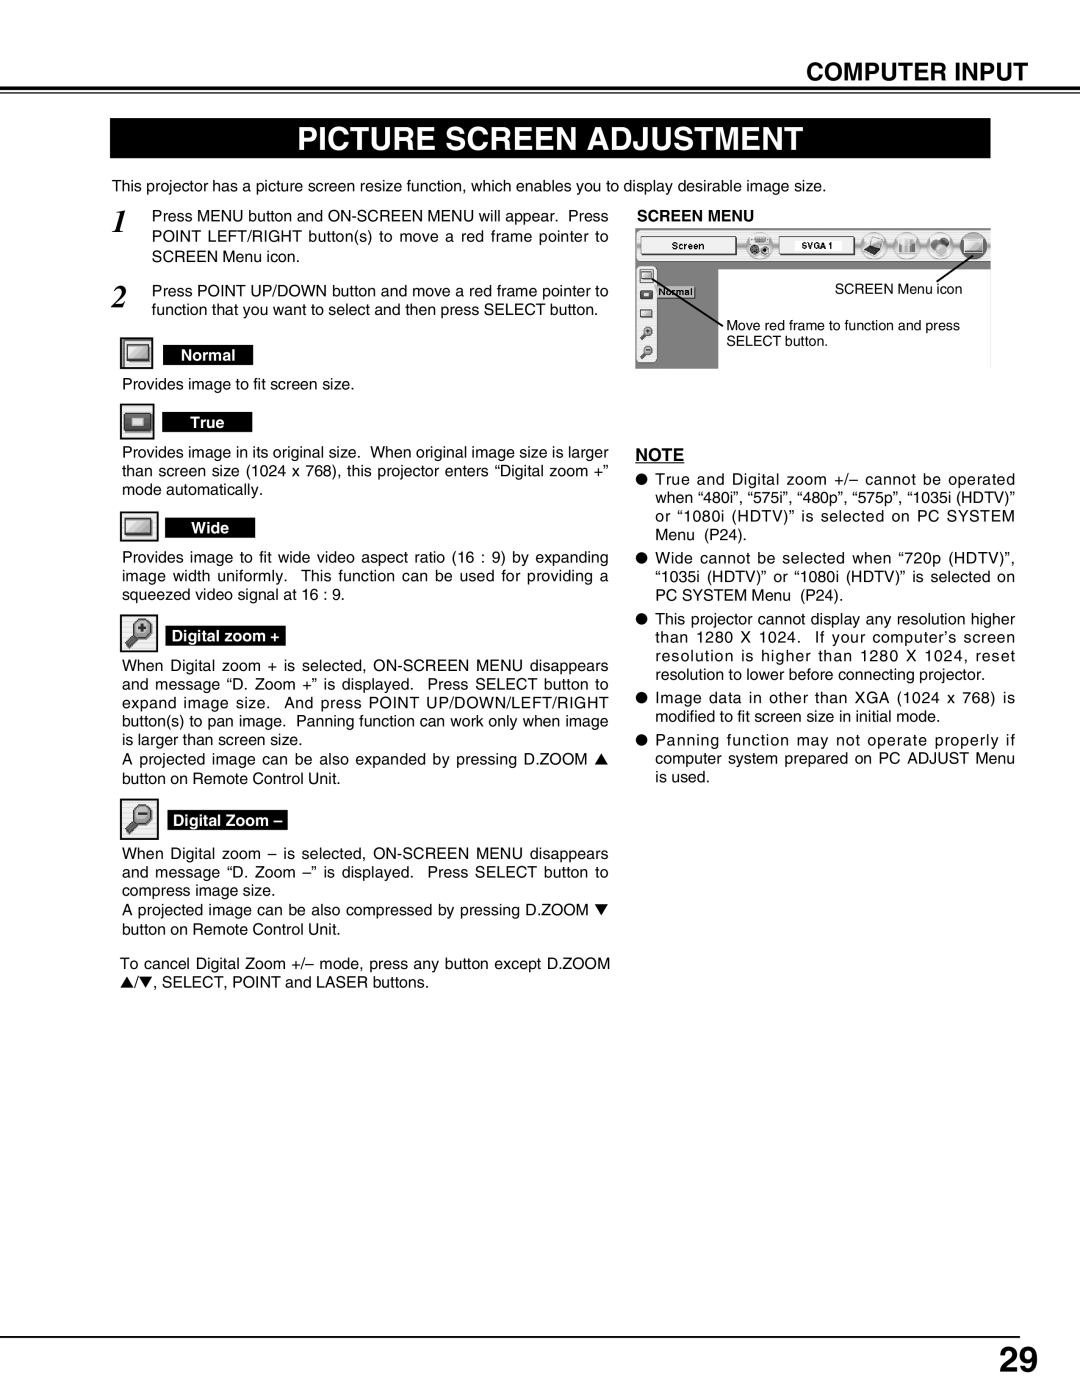 Eiki LC-X50 instruction manual Picture Screen Adjustment, Screen Menu 